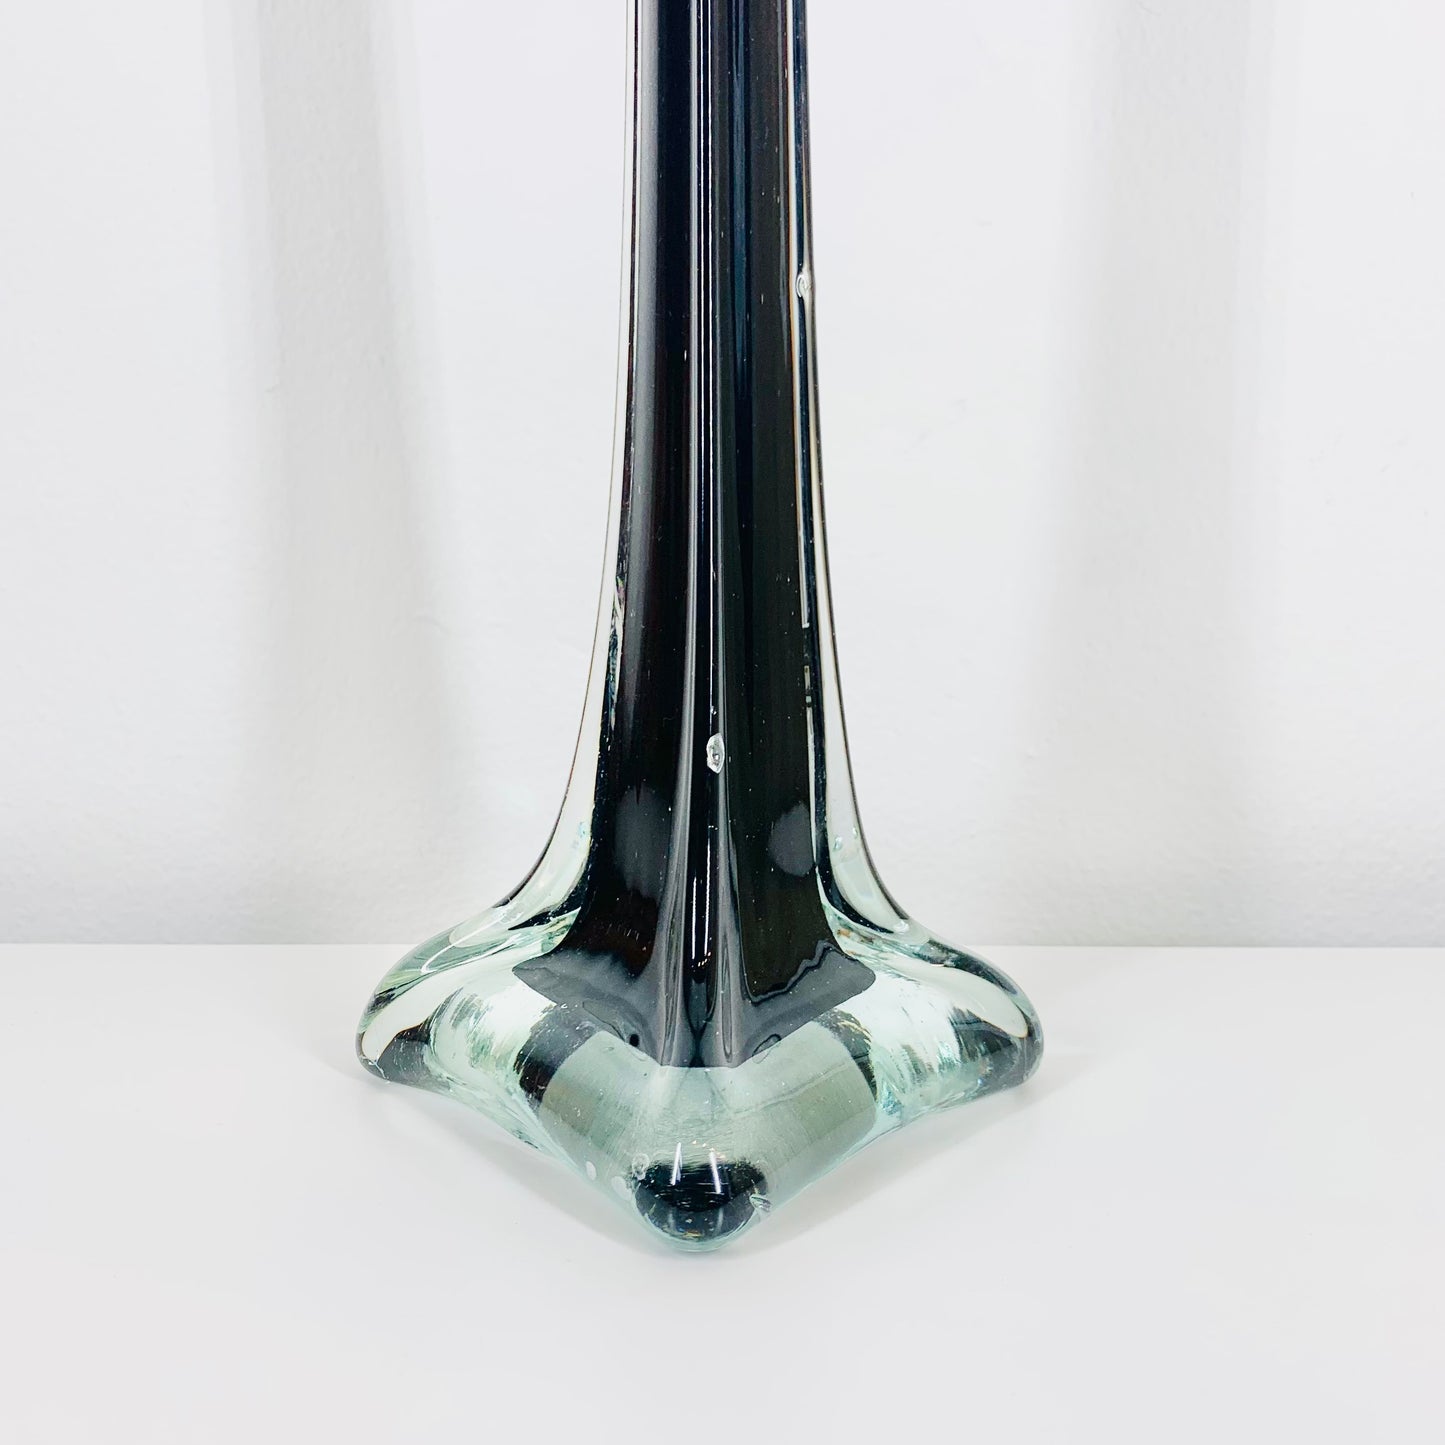 Very tall midcentury black glass vase